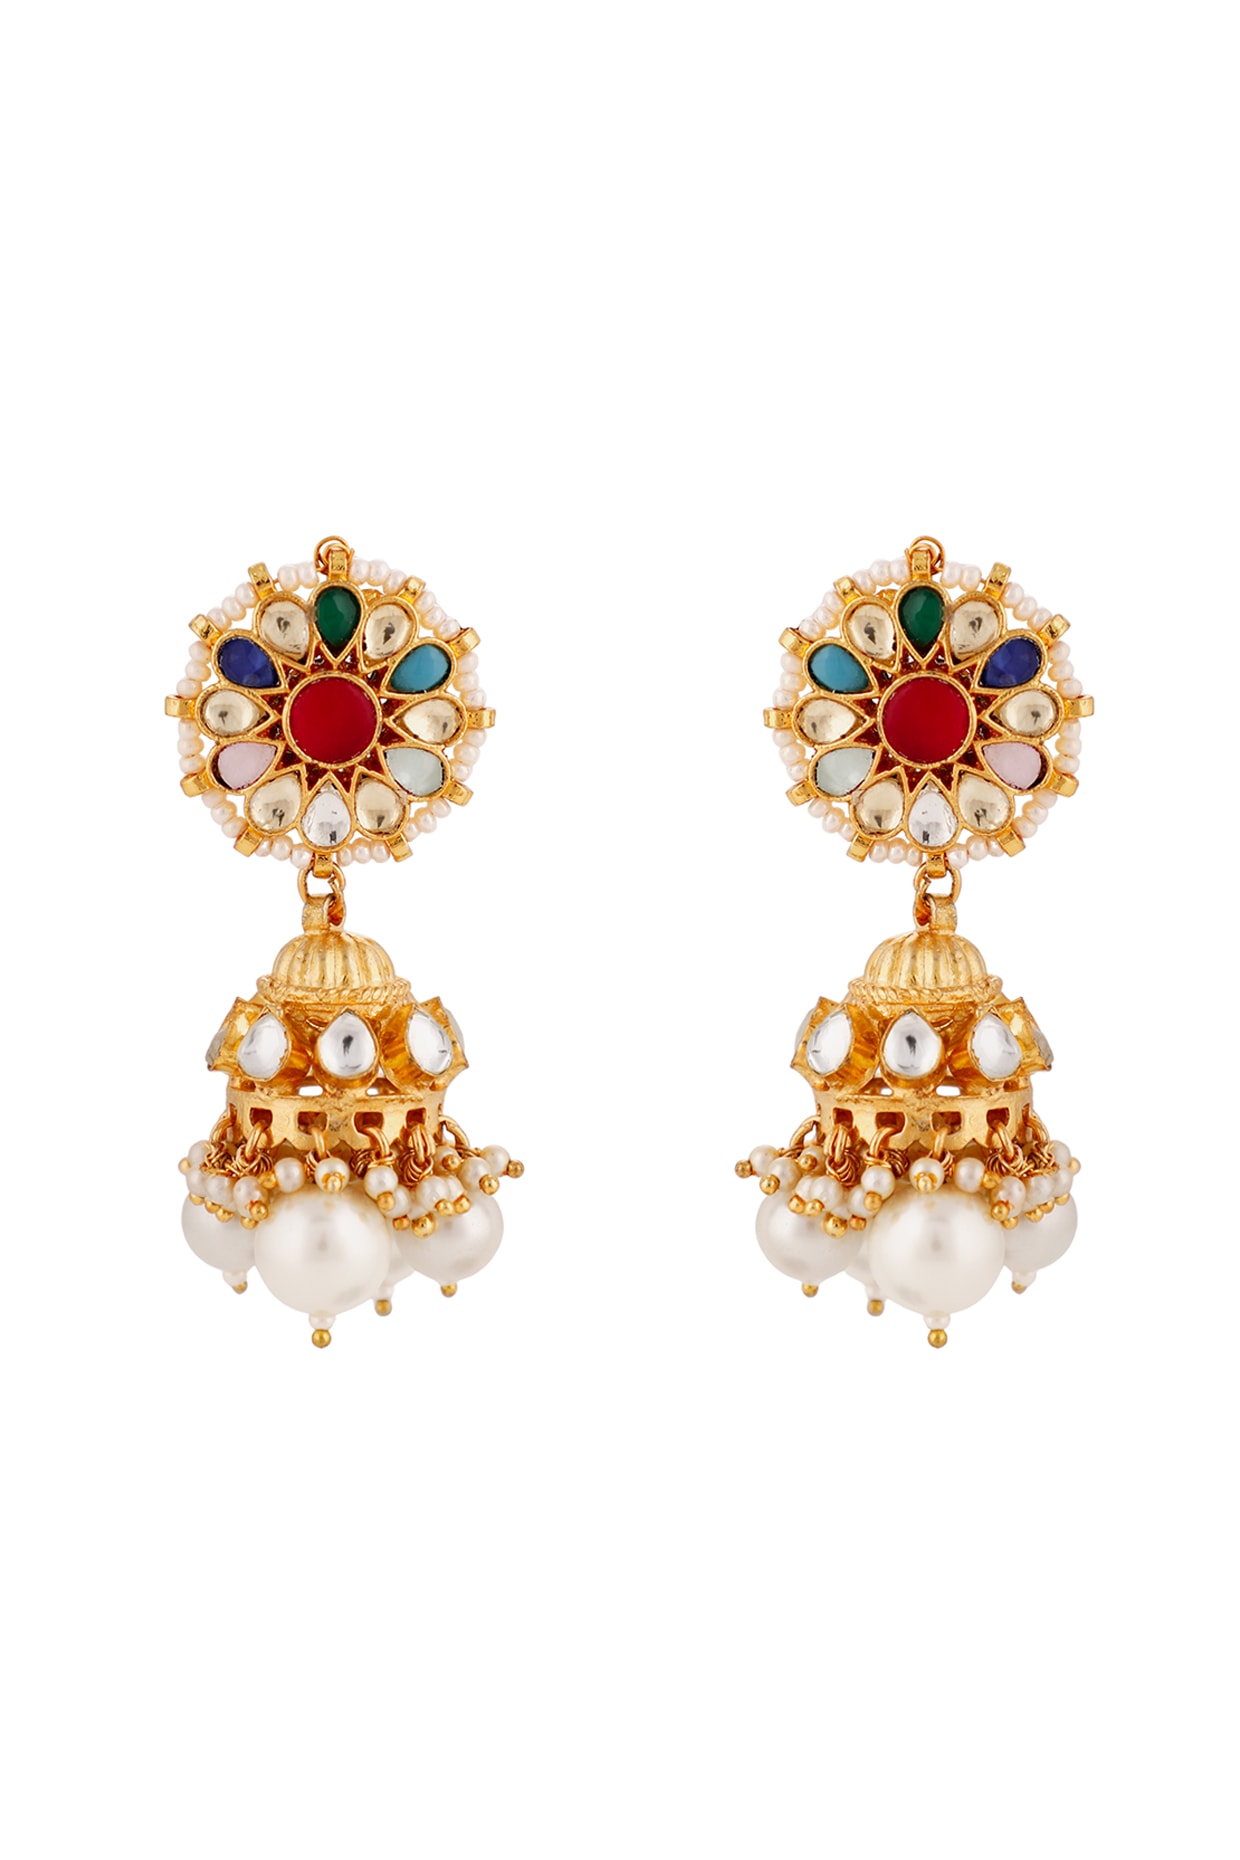 Buy Gold Plated Antique Ruby Jhumkha Earrings Online|Kollam Supreme